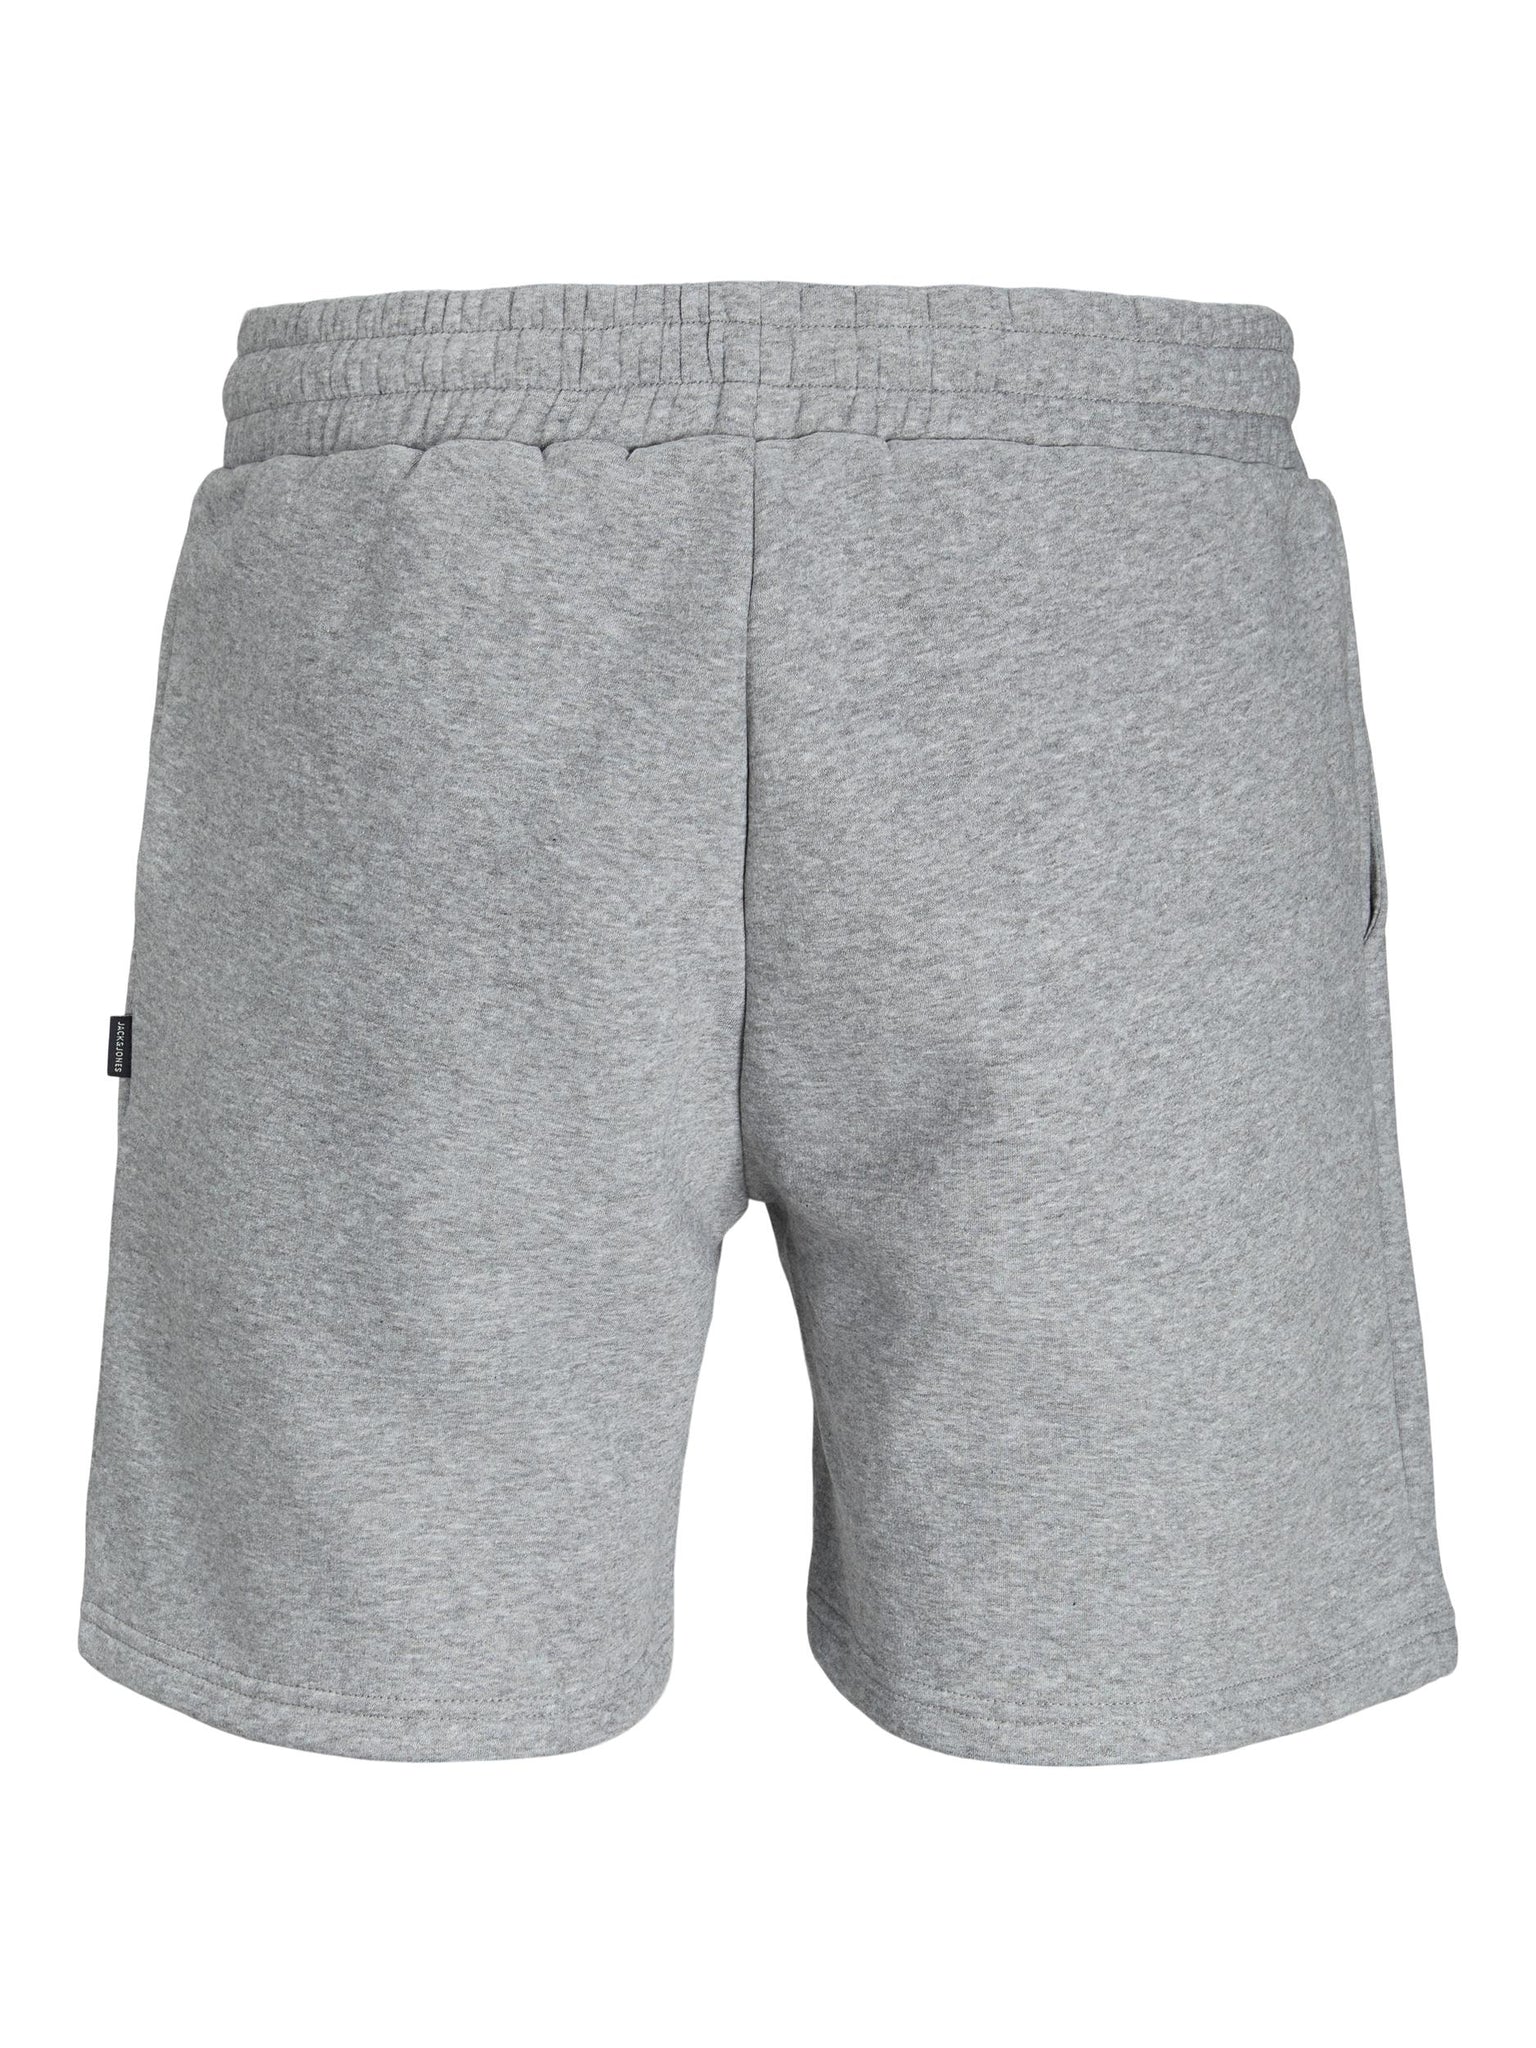 Jack &amp; Jones Star Gray Sweatshirt Shorts